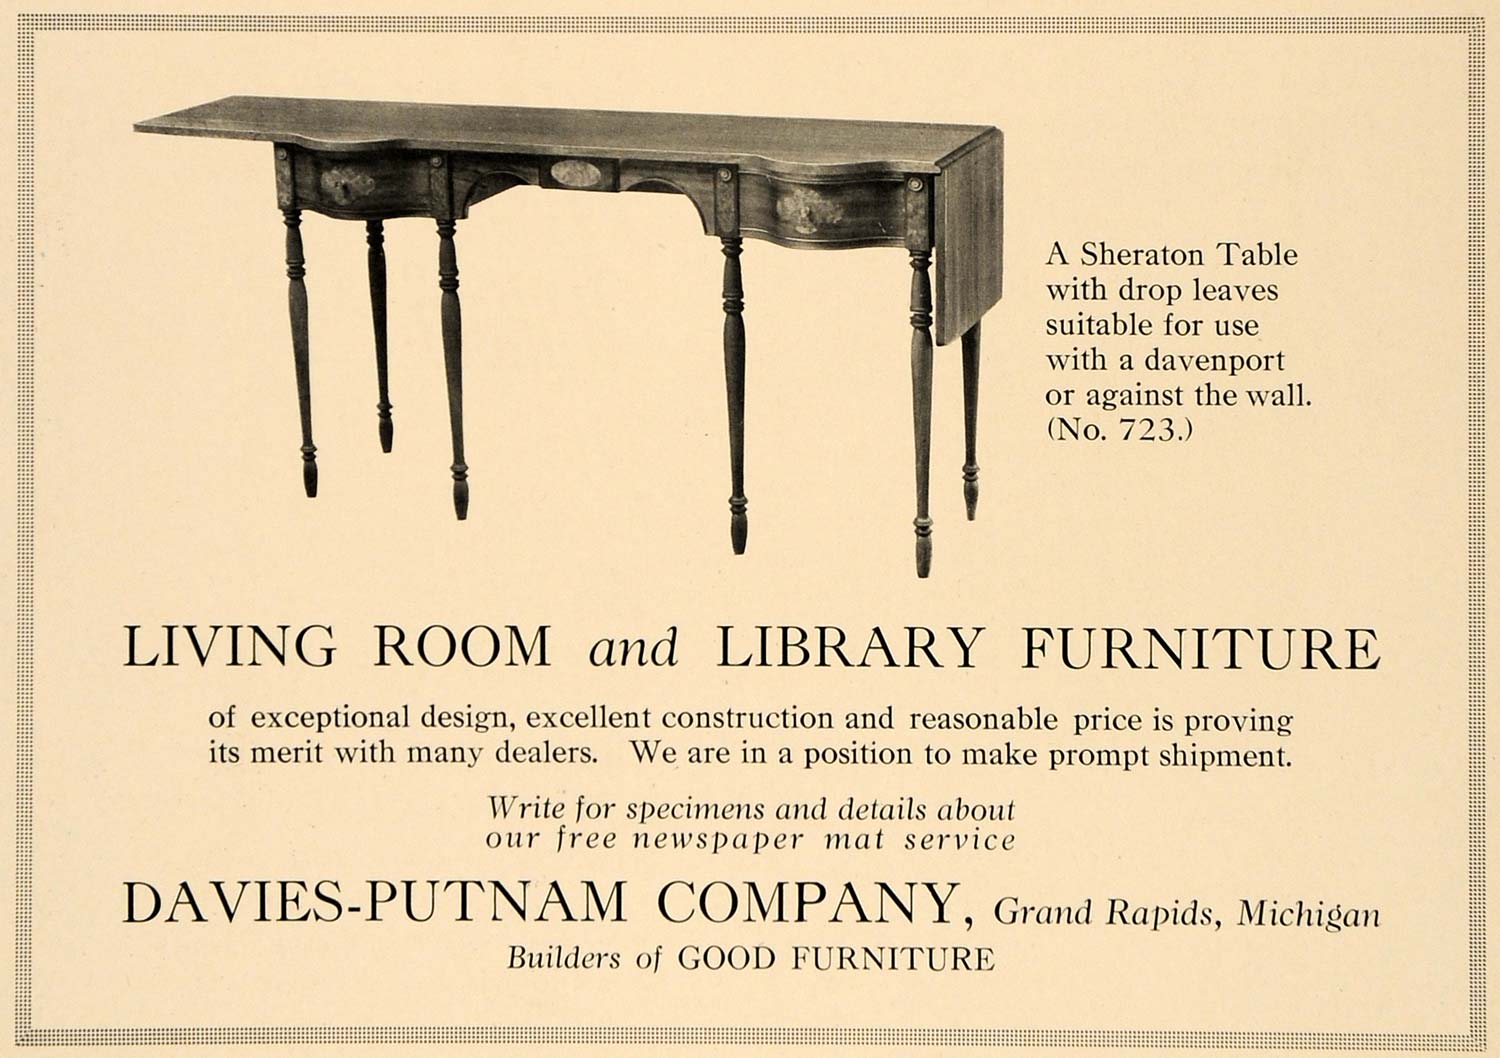 1918 Ad Davies-Putnam Co. Furniture Sheraton Table 723 - ORIGINAL GF2